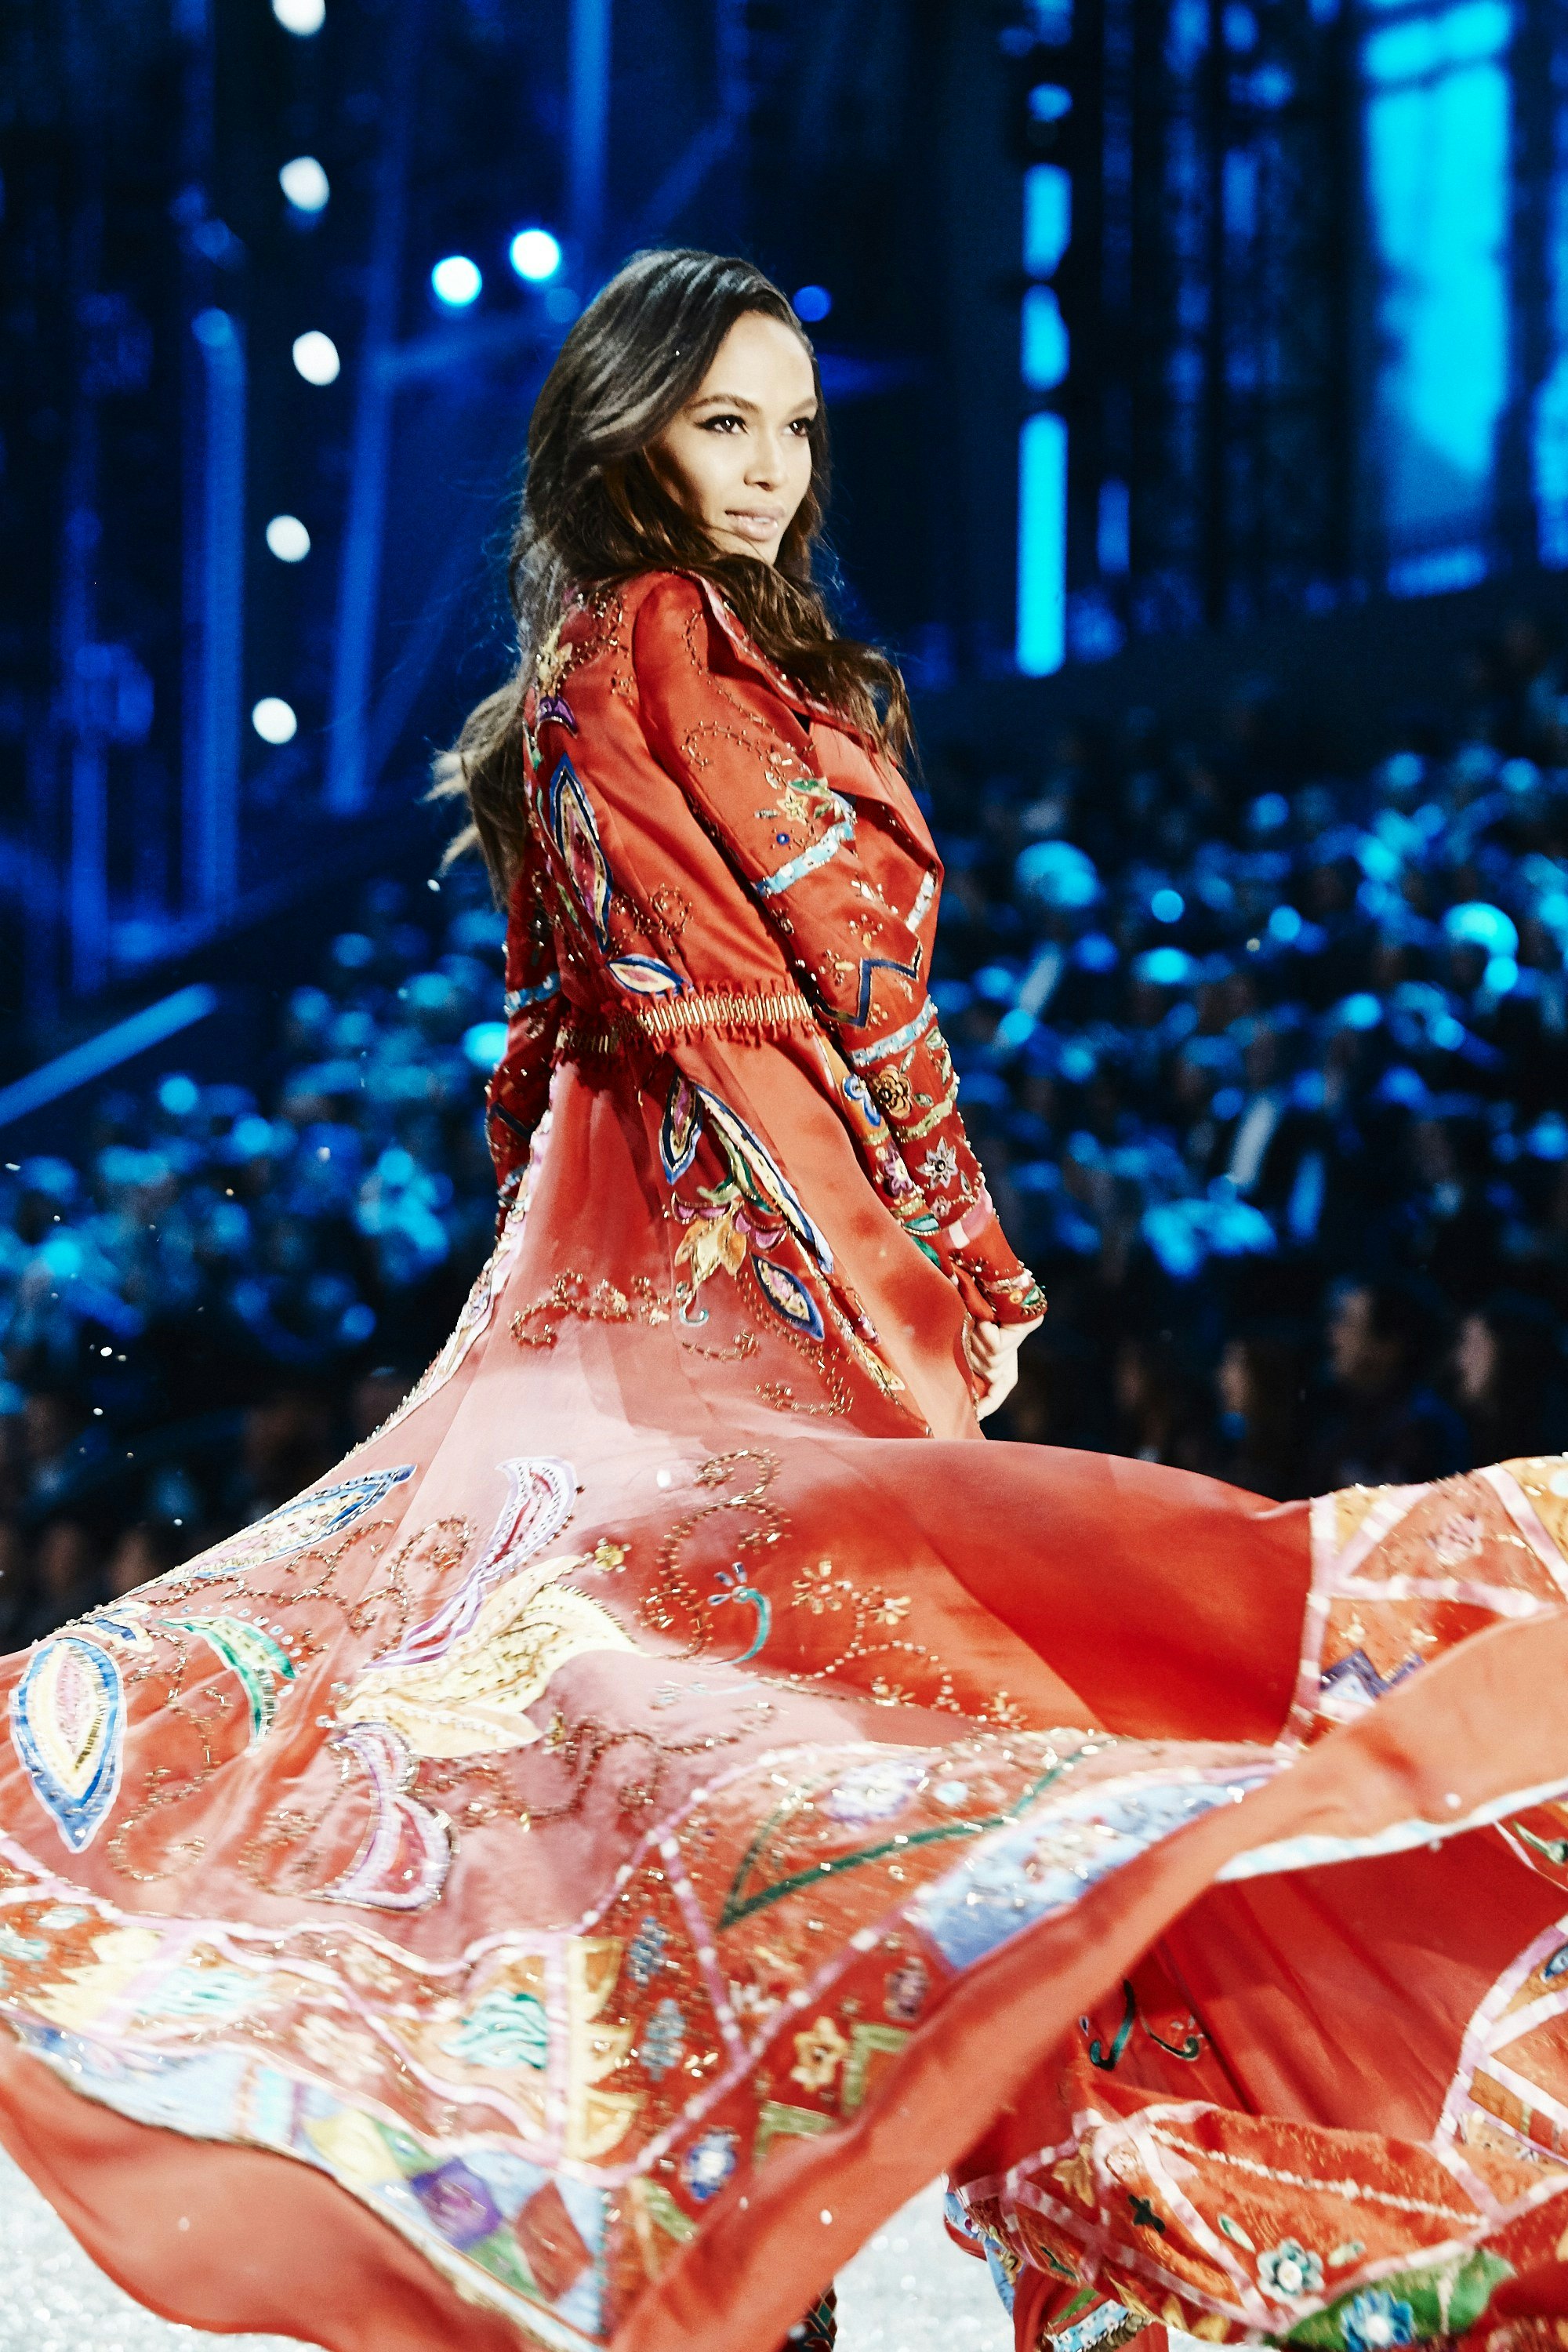 Silk Stockings: The Glamorous World of Victoria's Secret Fashion Show